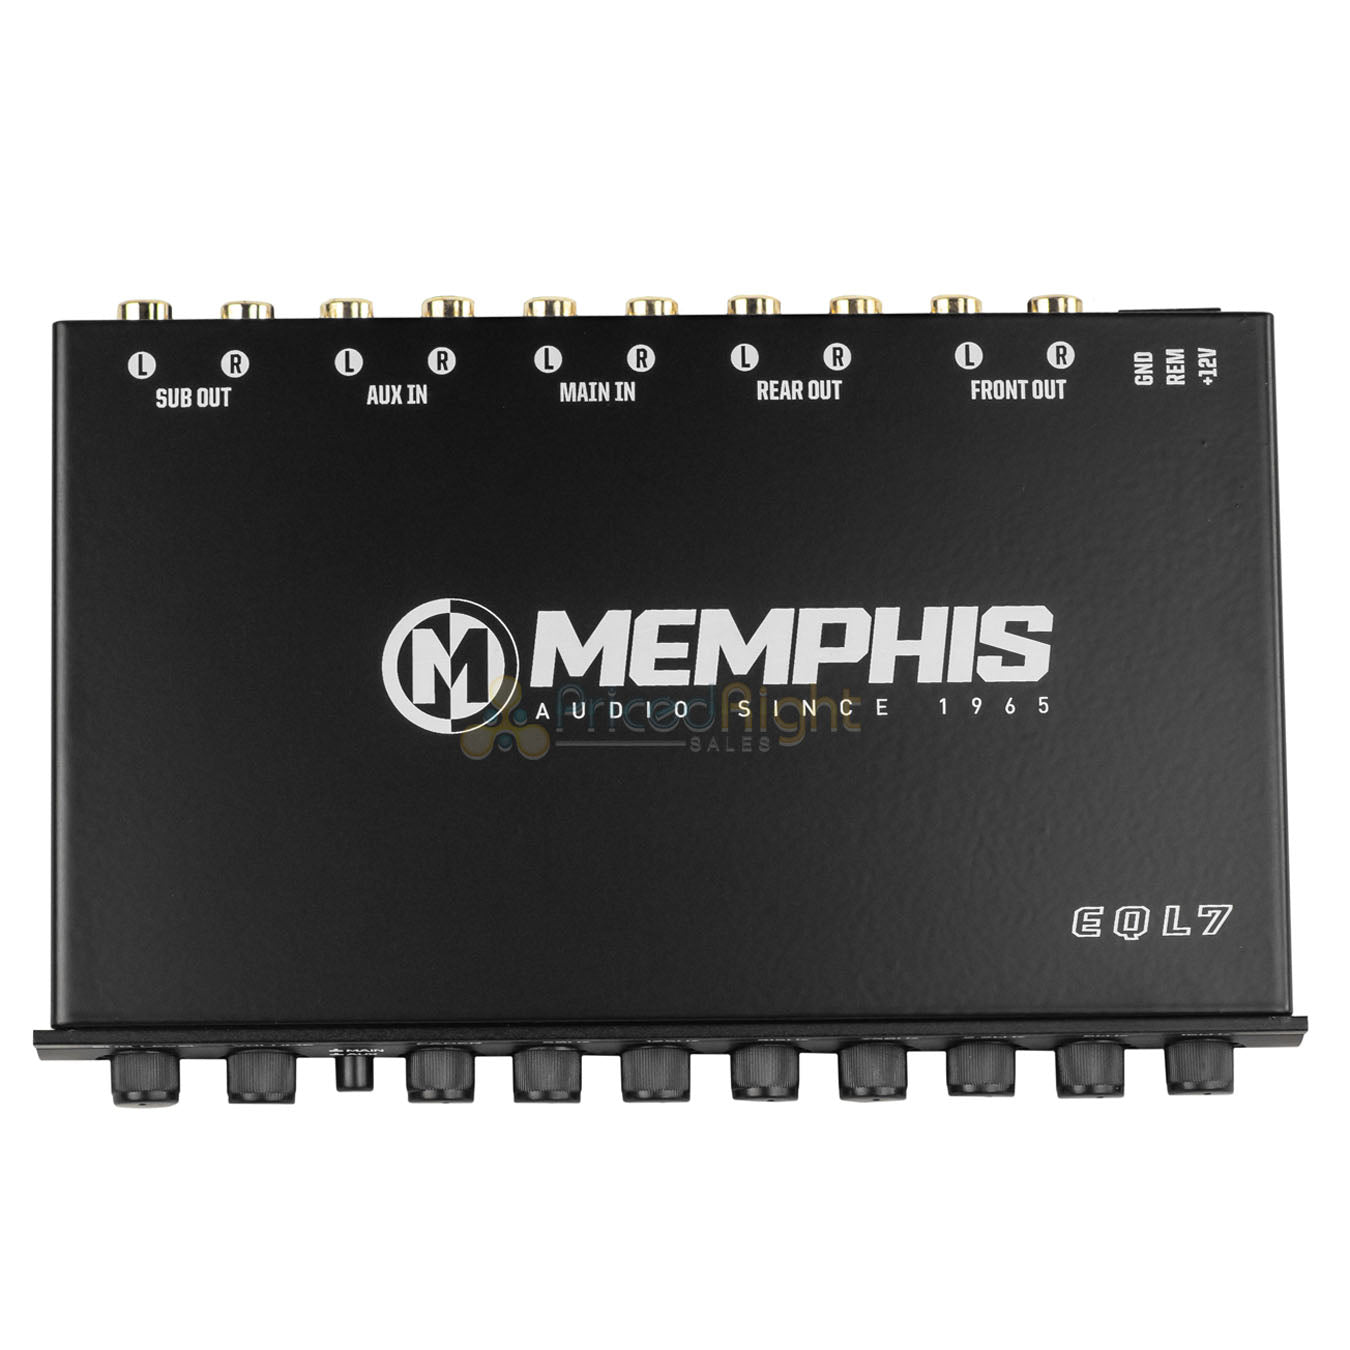 Memphis Audio 7 Band Graphic Equalizer Car Audio 8V Output AUX Input Preamp EQL7